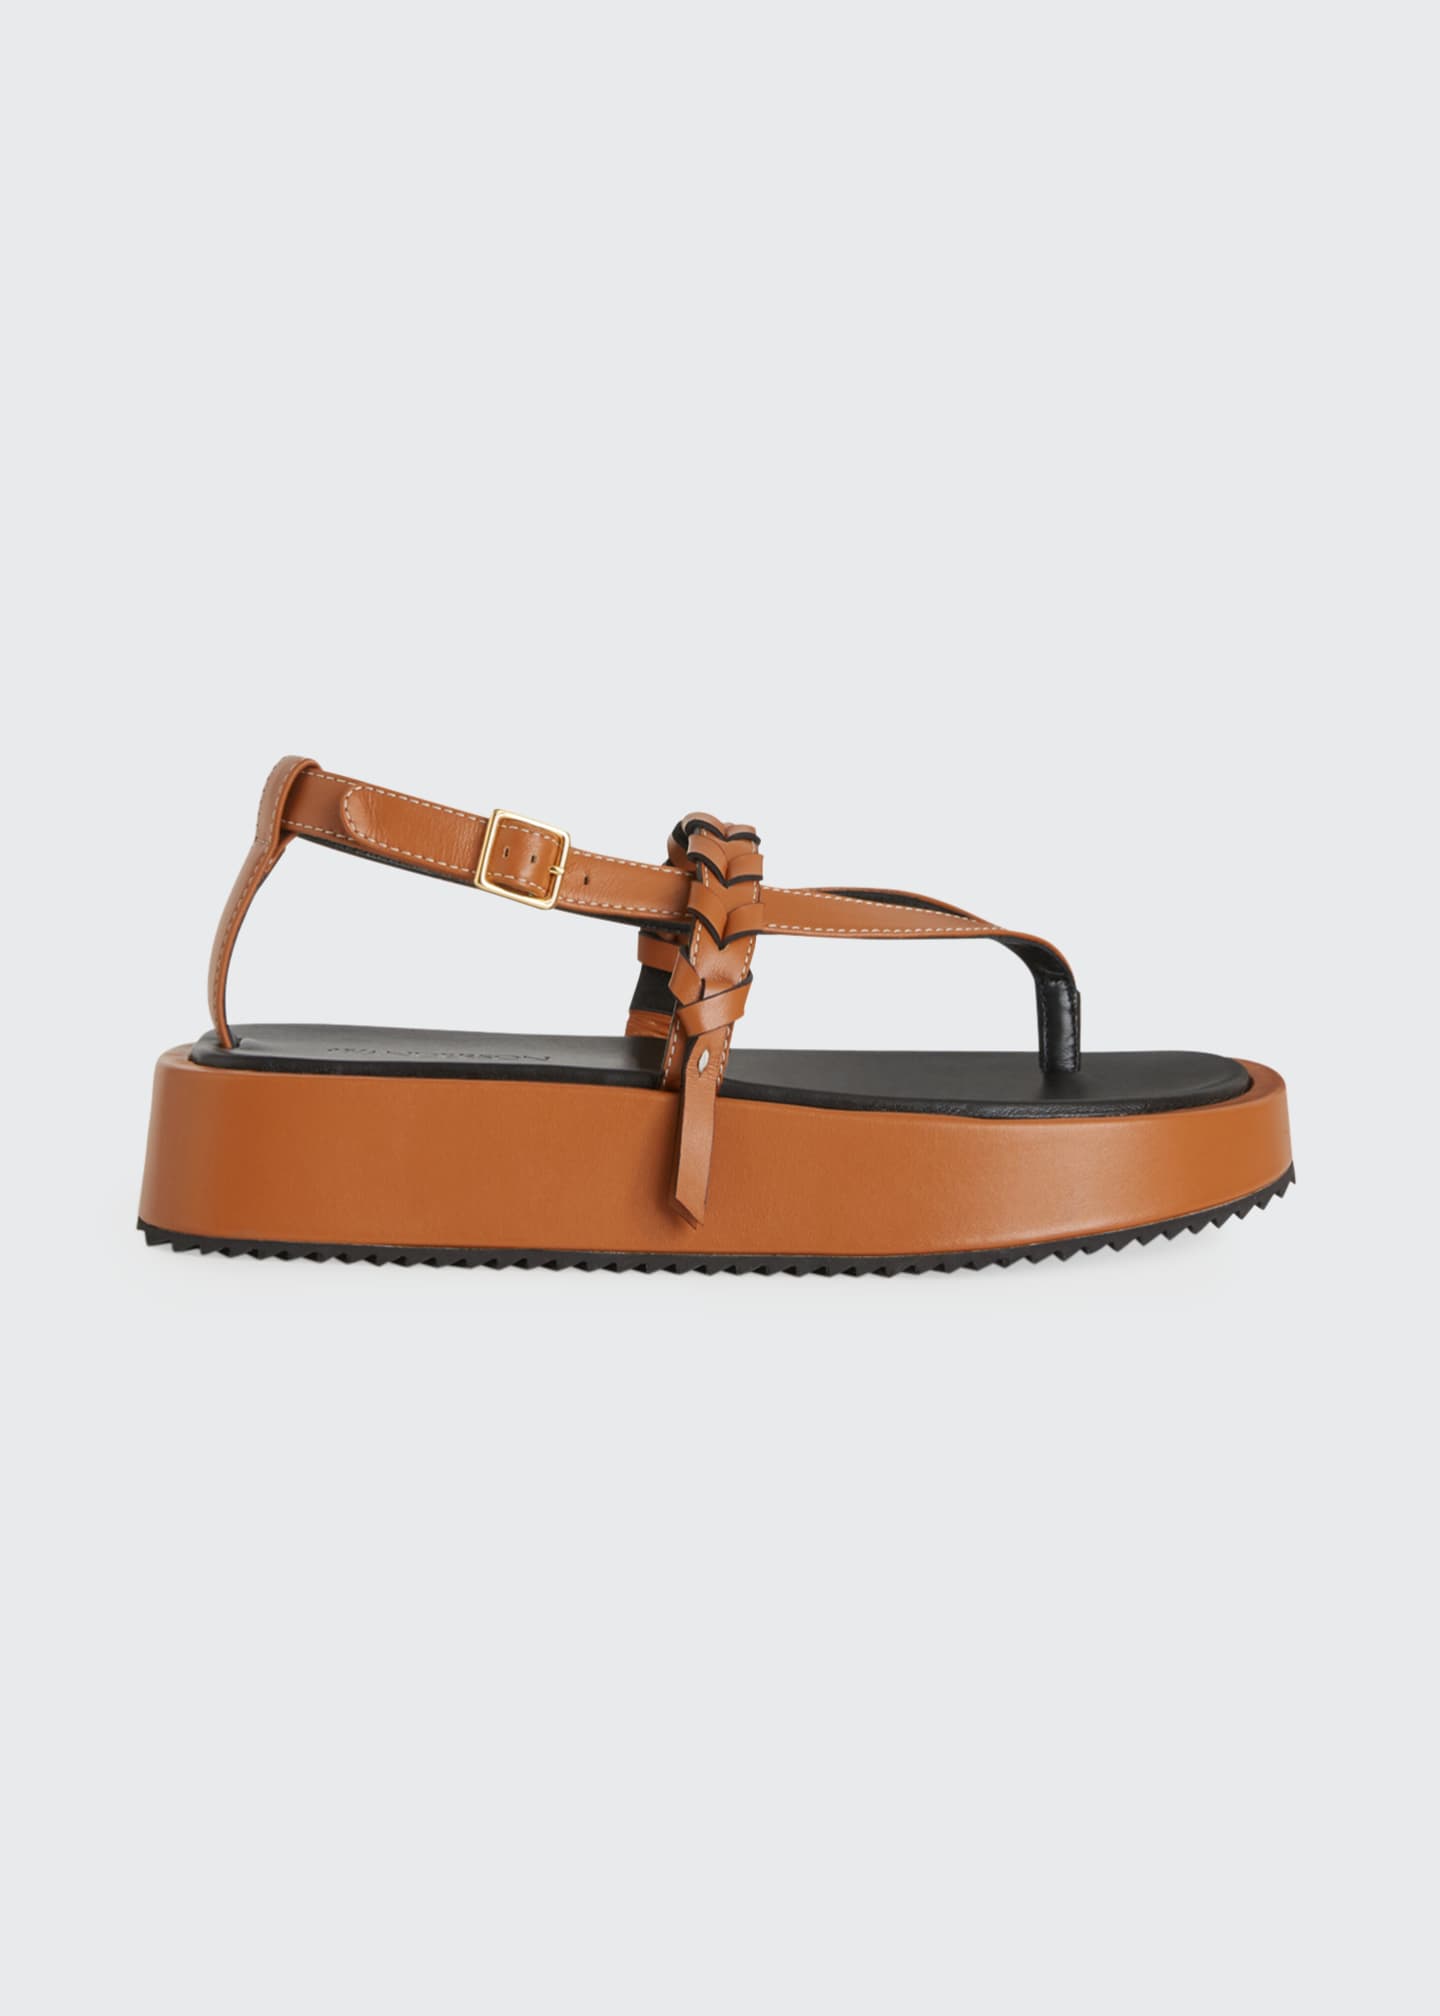 JW Anderson Leather Thong Flatform Sandals - Bergdorf Goodman